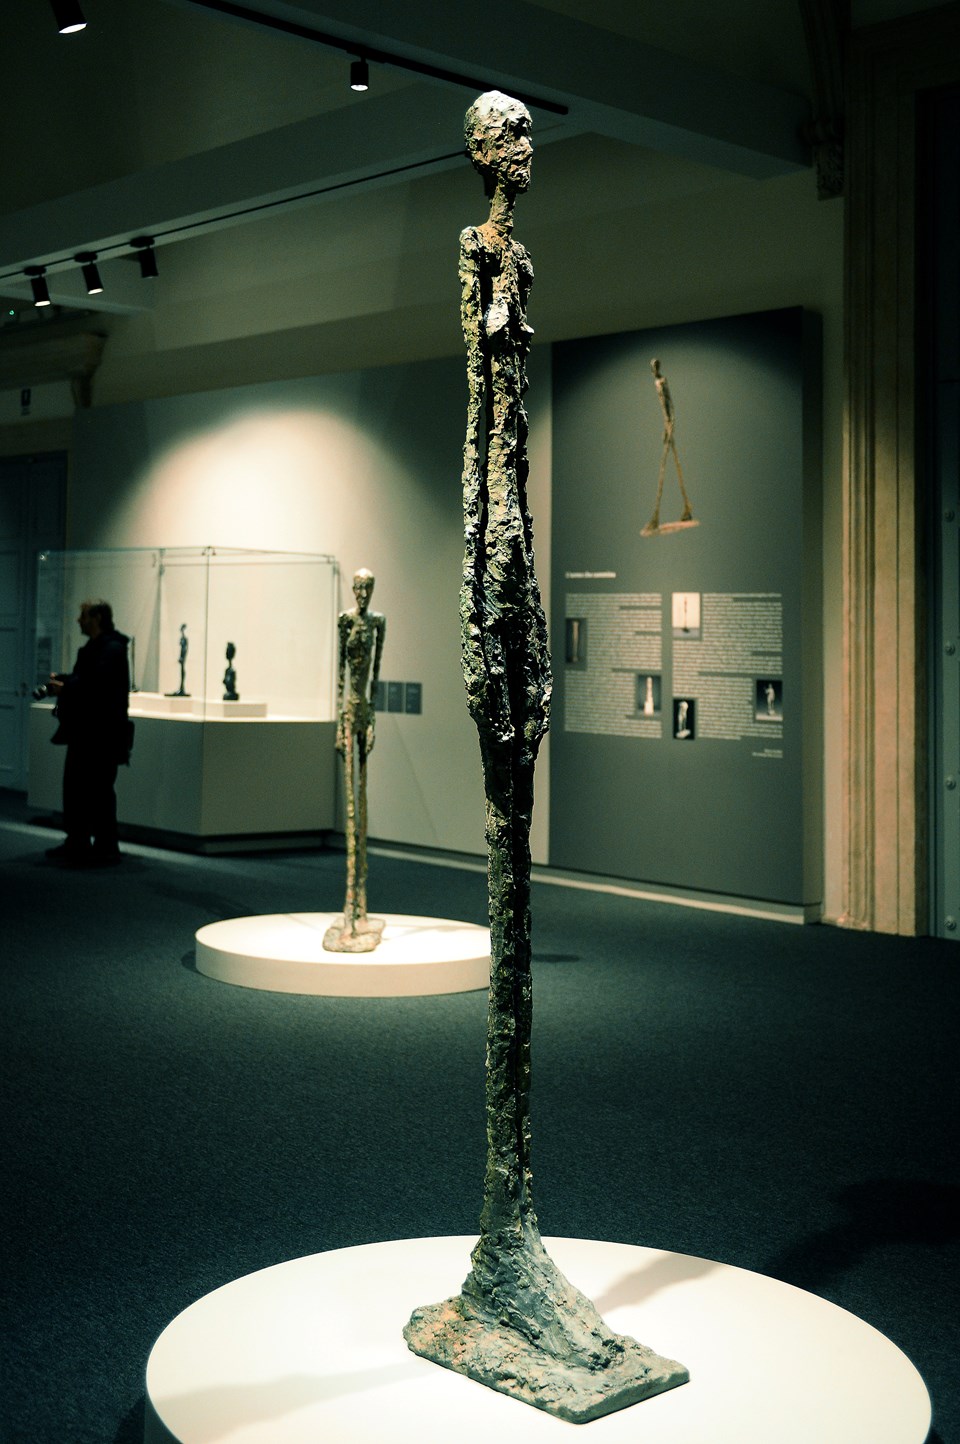 Alberto Giacometti’nin bir eseri daha satışta - 1